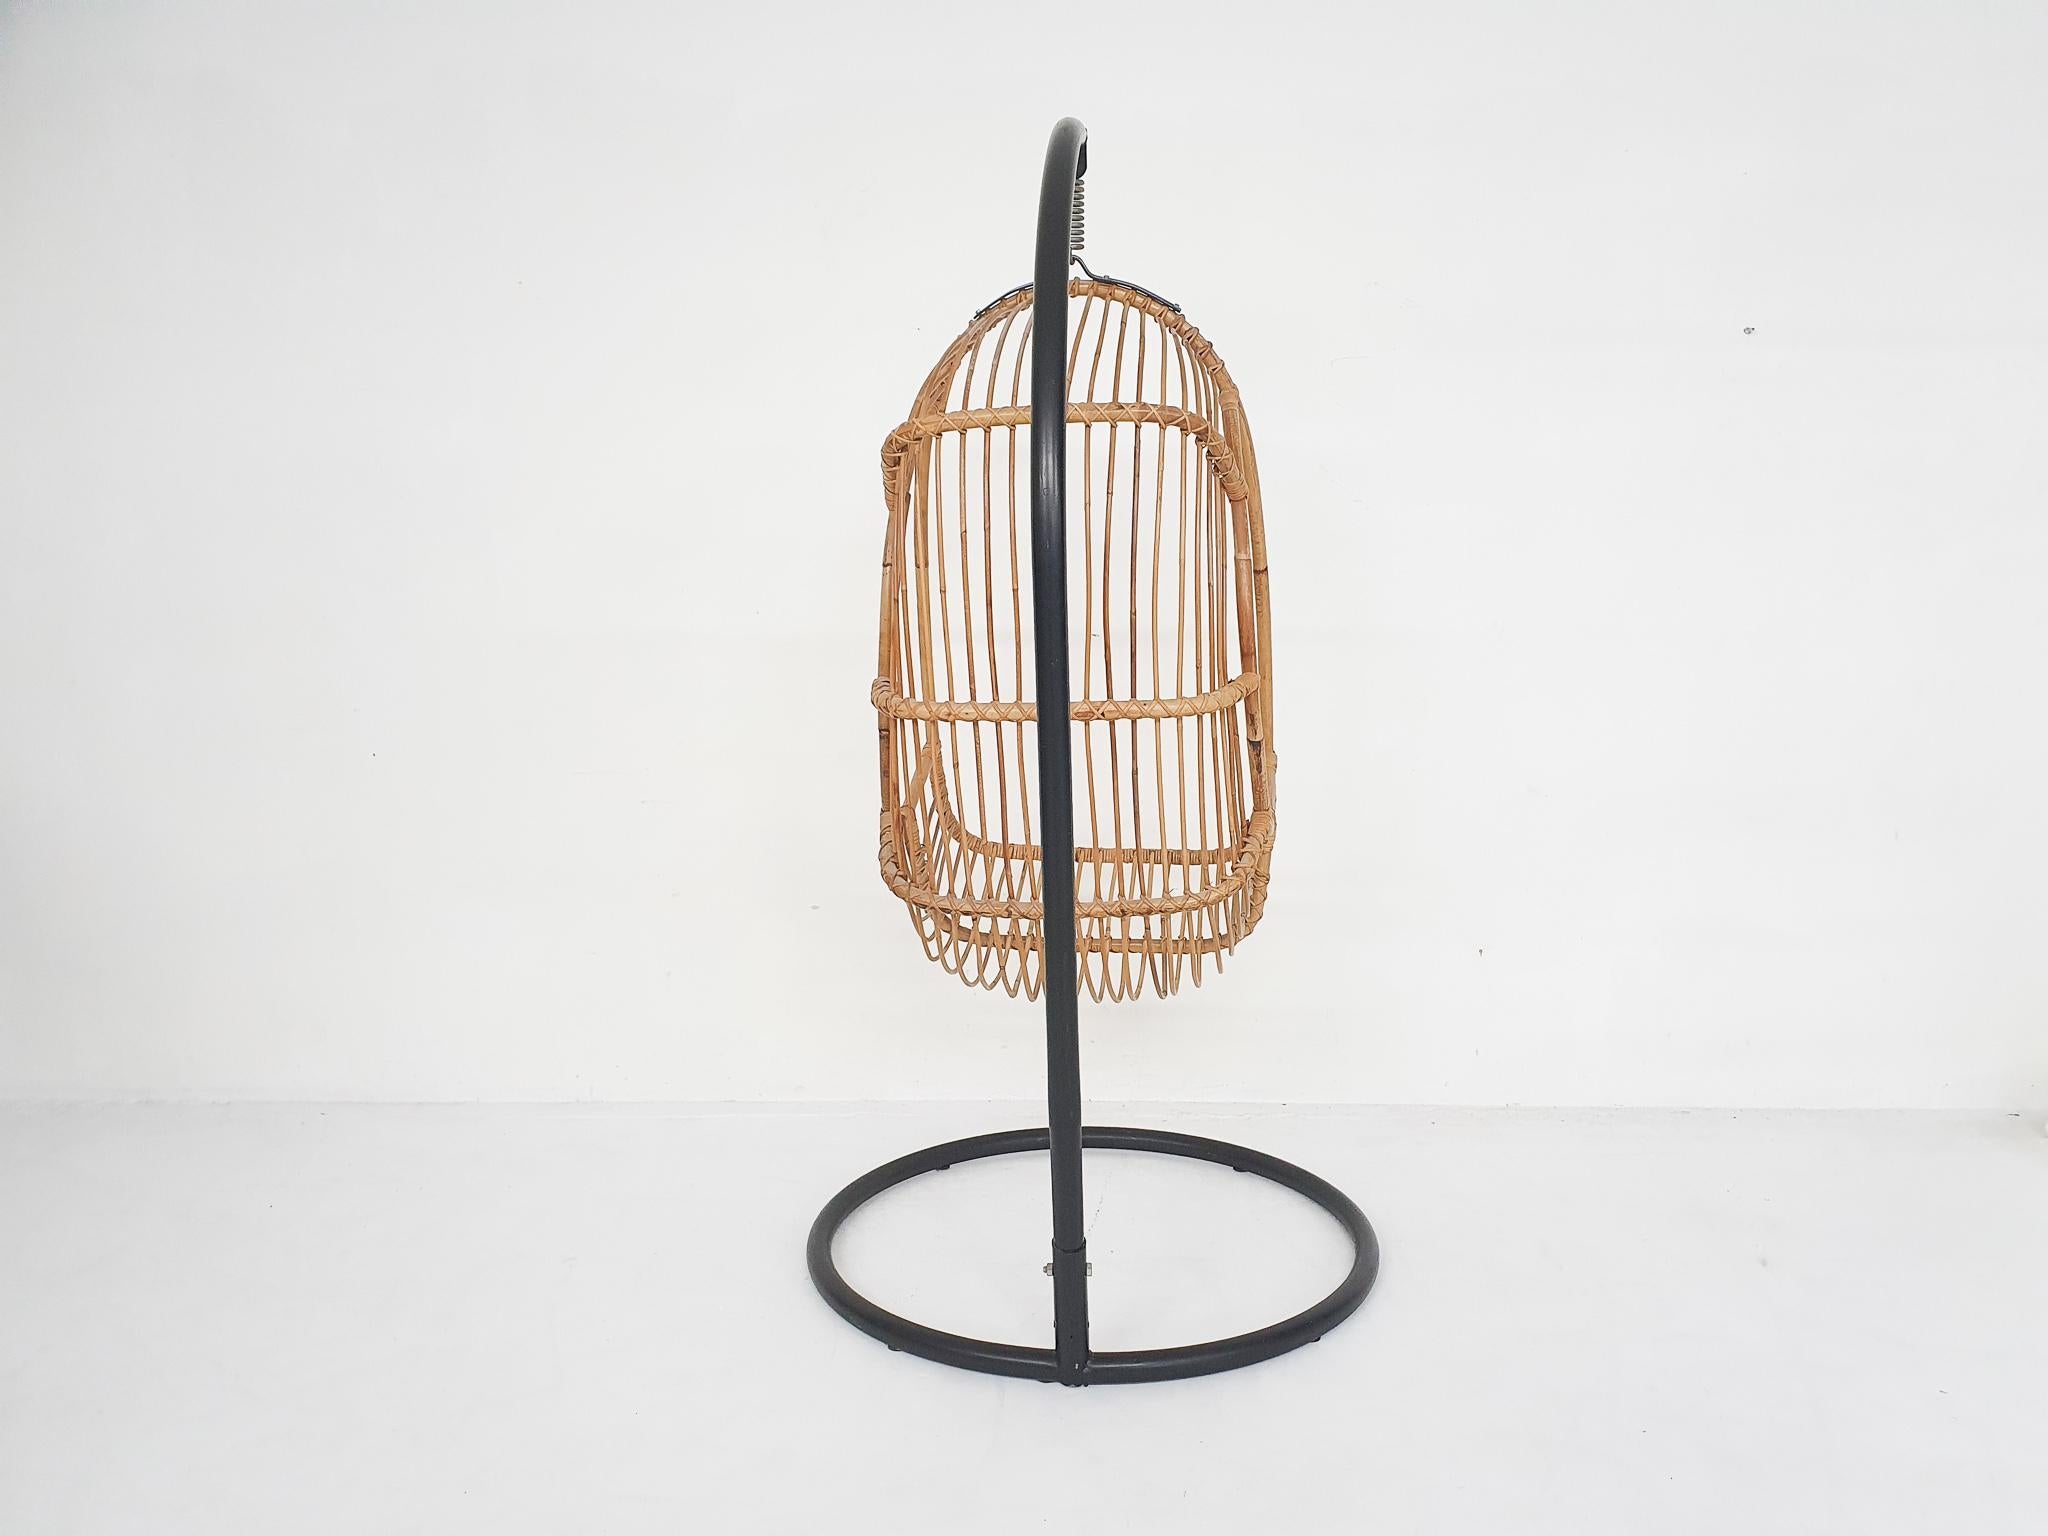 Vintage Eiförmiger Hängestuhl aus Bambus auf Metallsockel, 1960er Jahre (20. Jahrhundert) im Angebot